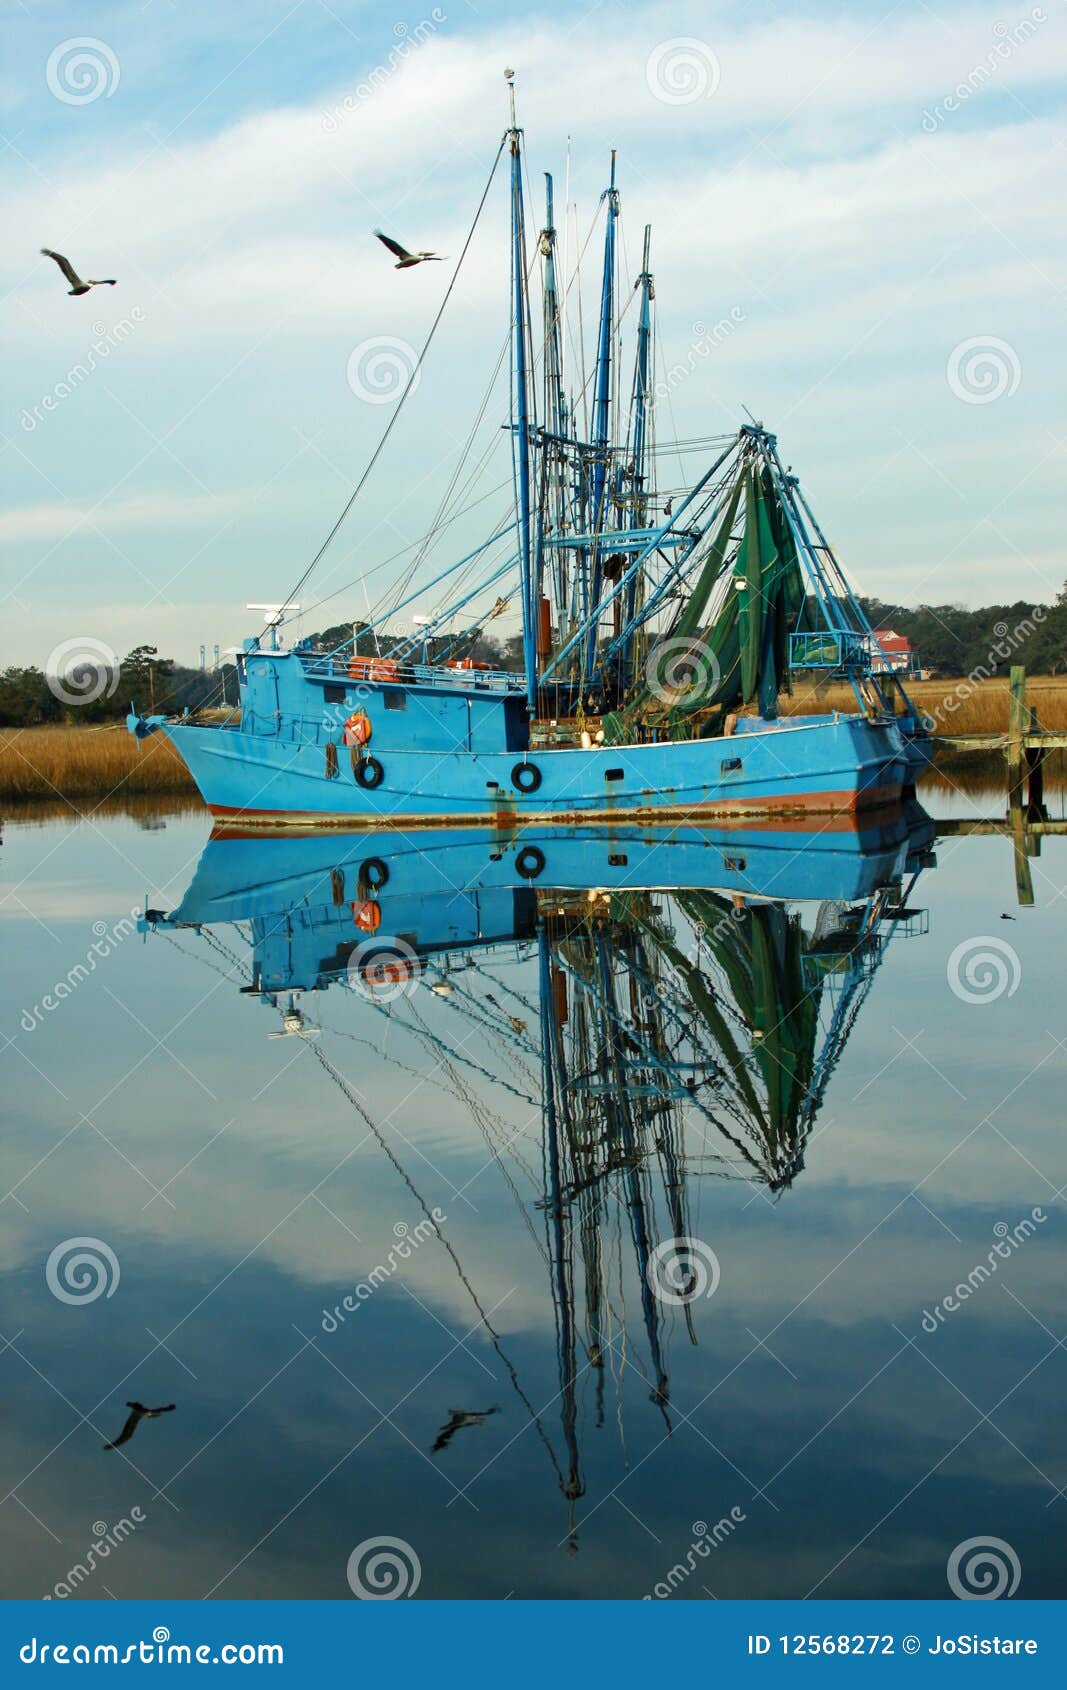 fishing boat reflections stock photography - image: 12568272